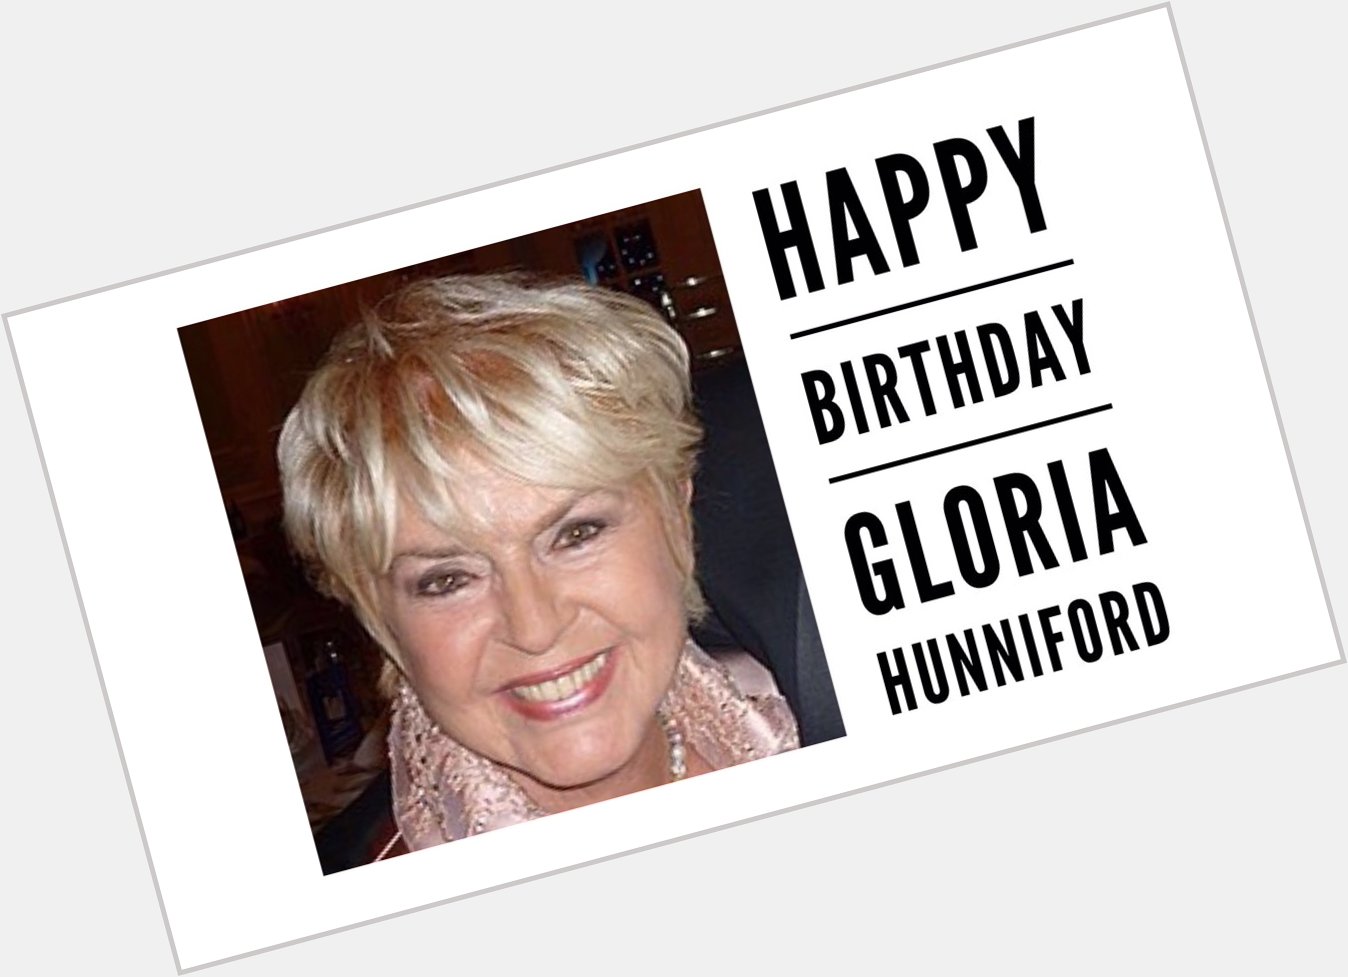 Born in Portafown, County Antrim 1940 Gloria Hunniford, TV personality.  Happy Birthday Gloria. 